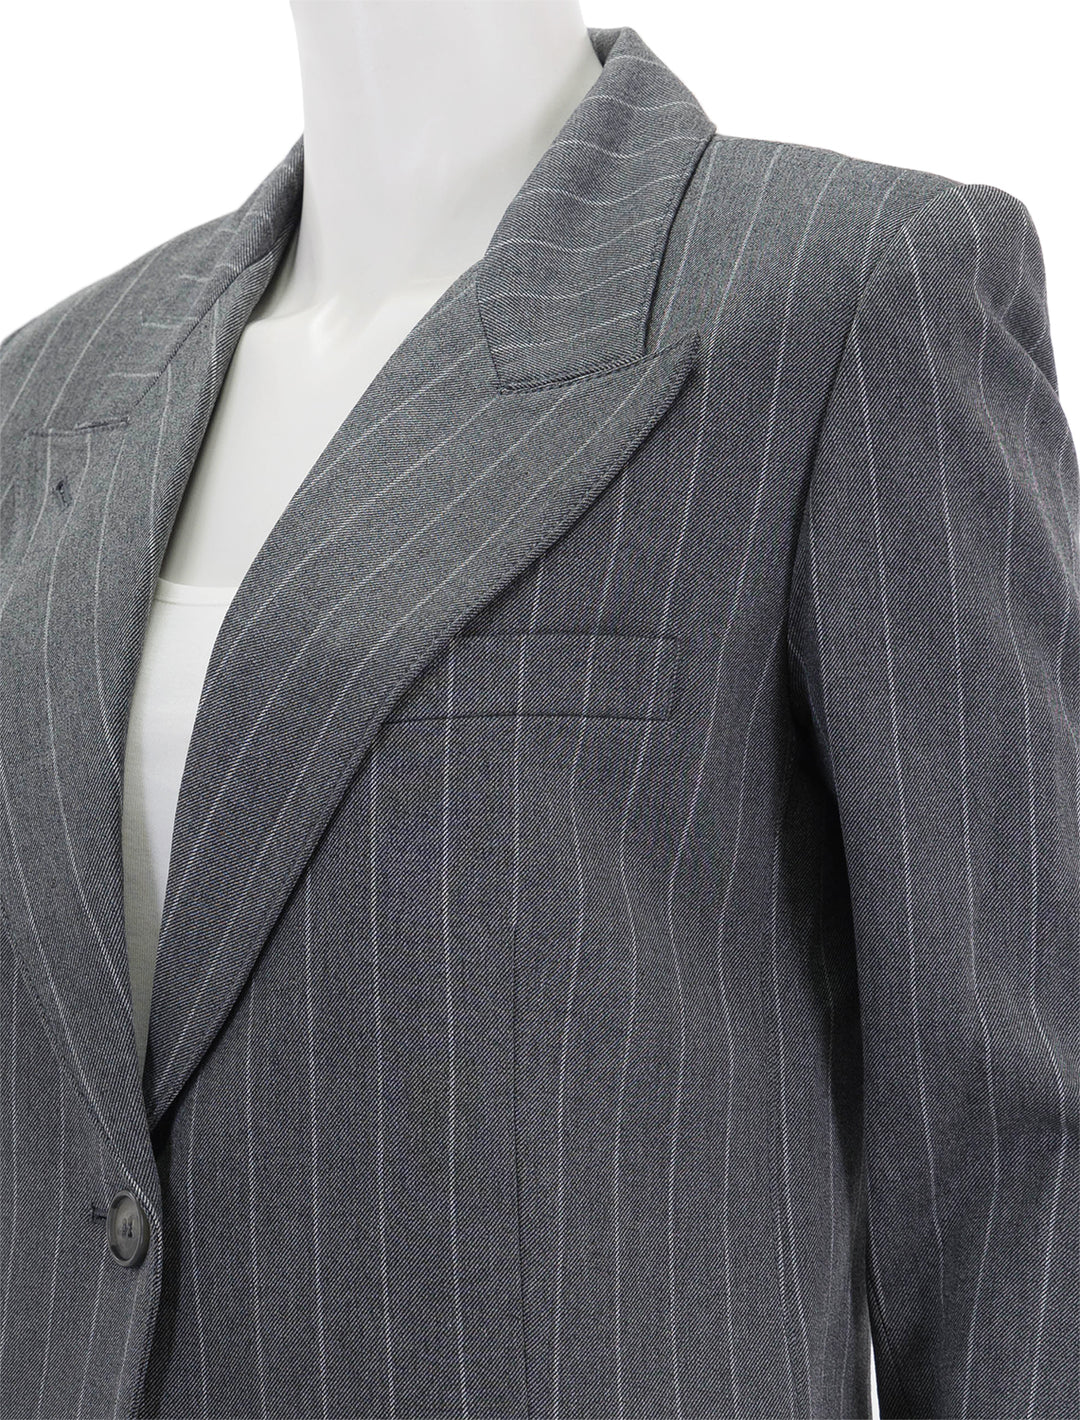 Close-up view of Smythe's 90's blazer in grey pinstripe.